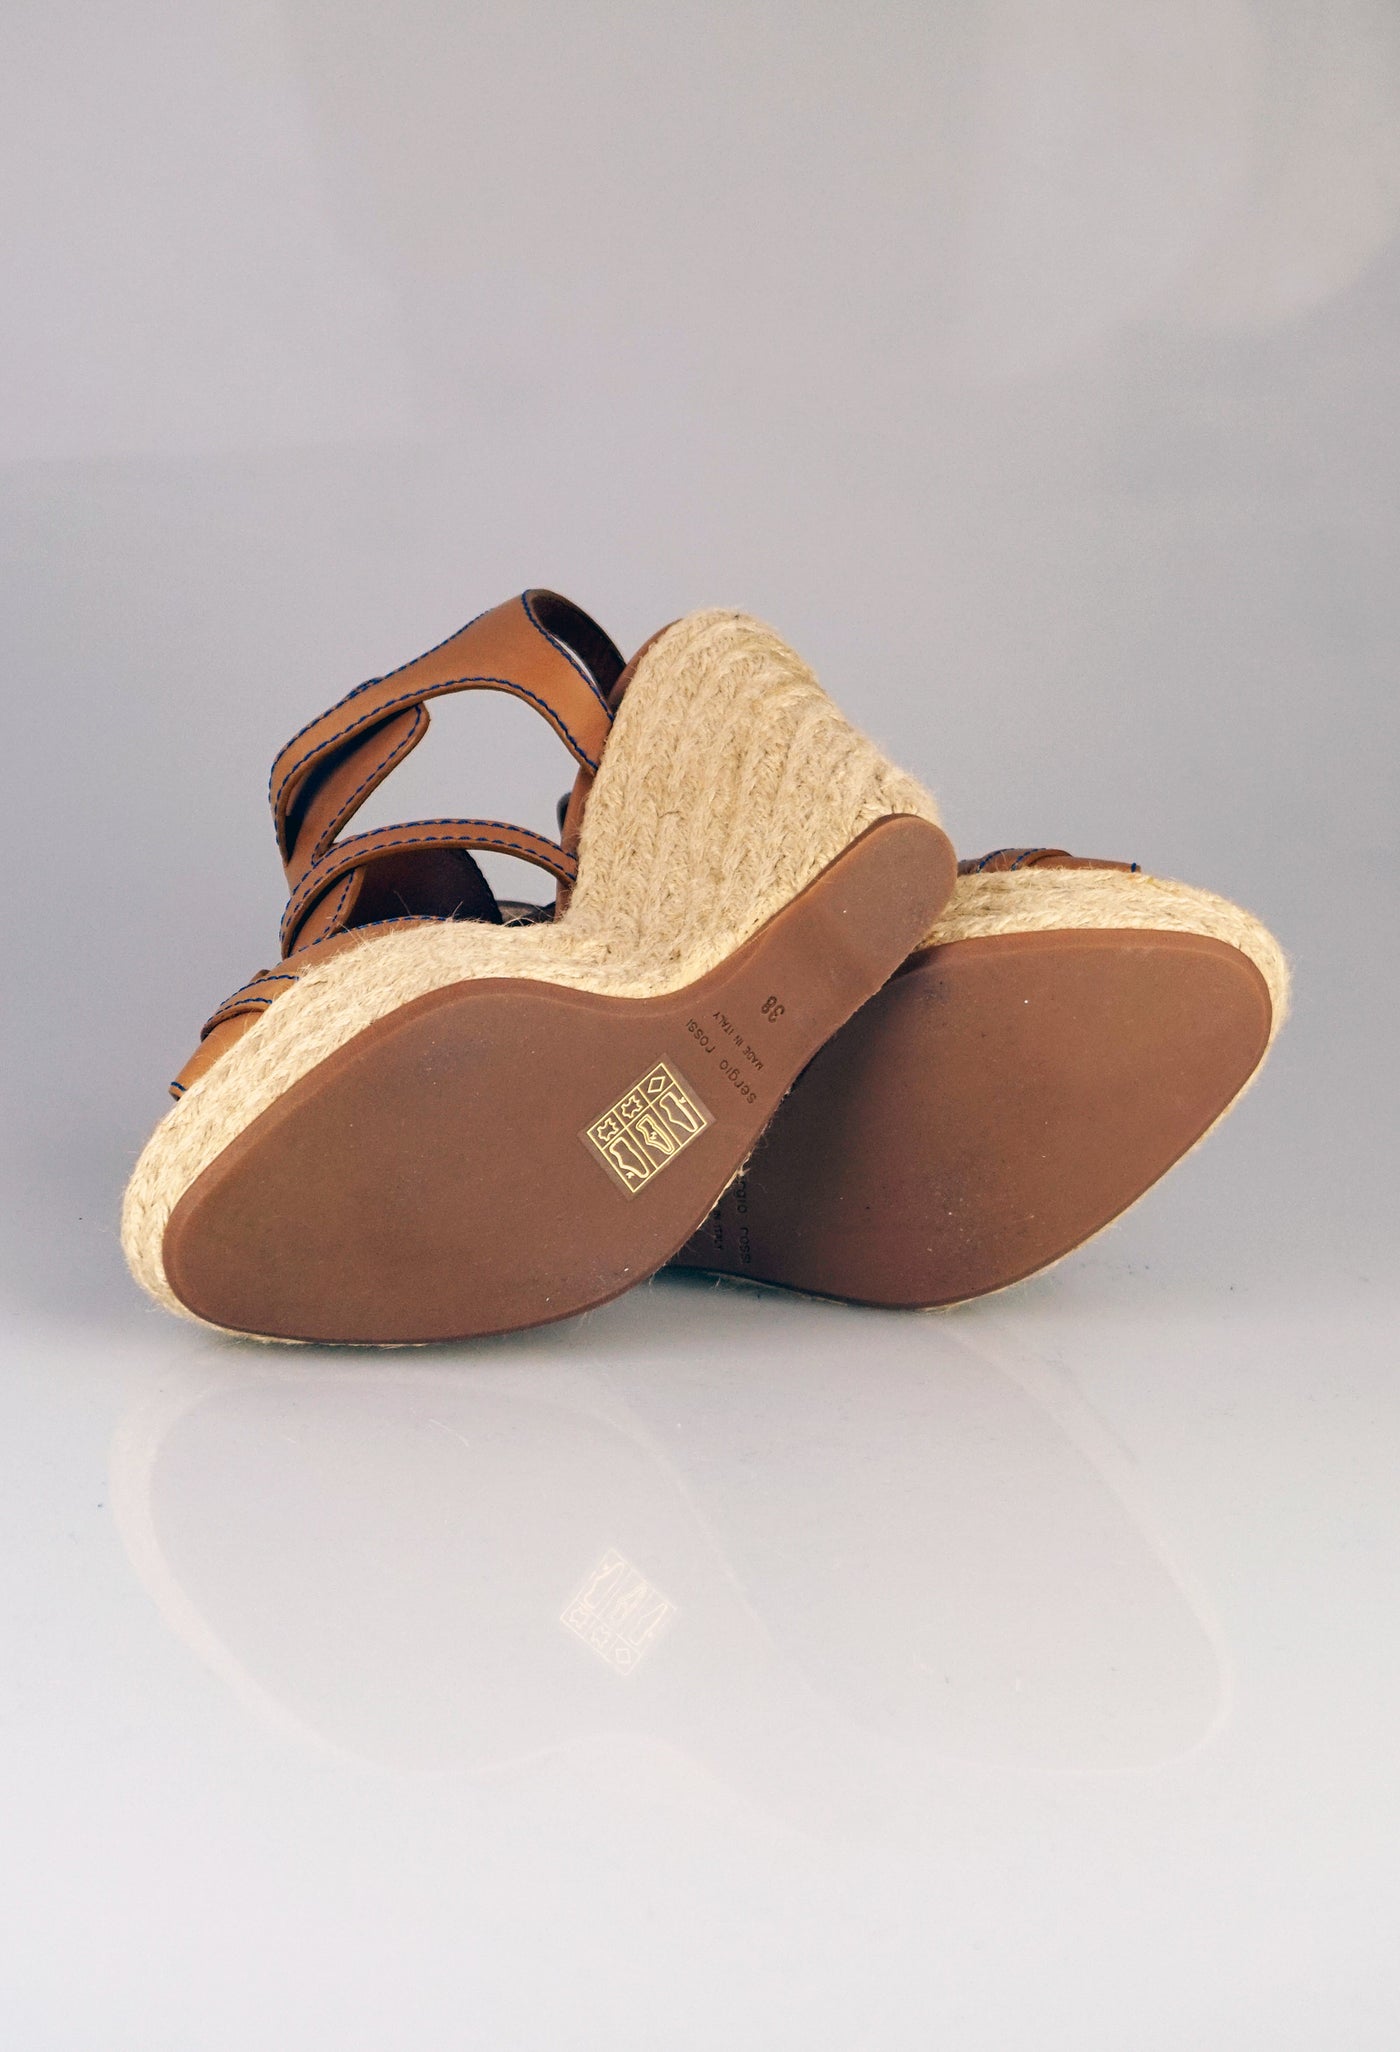 Wedges tan sandals